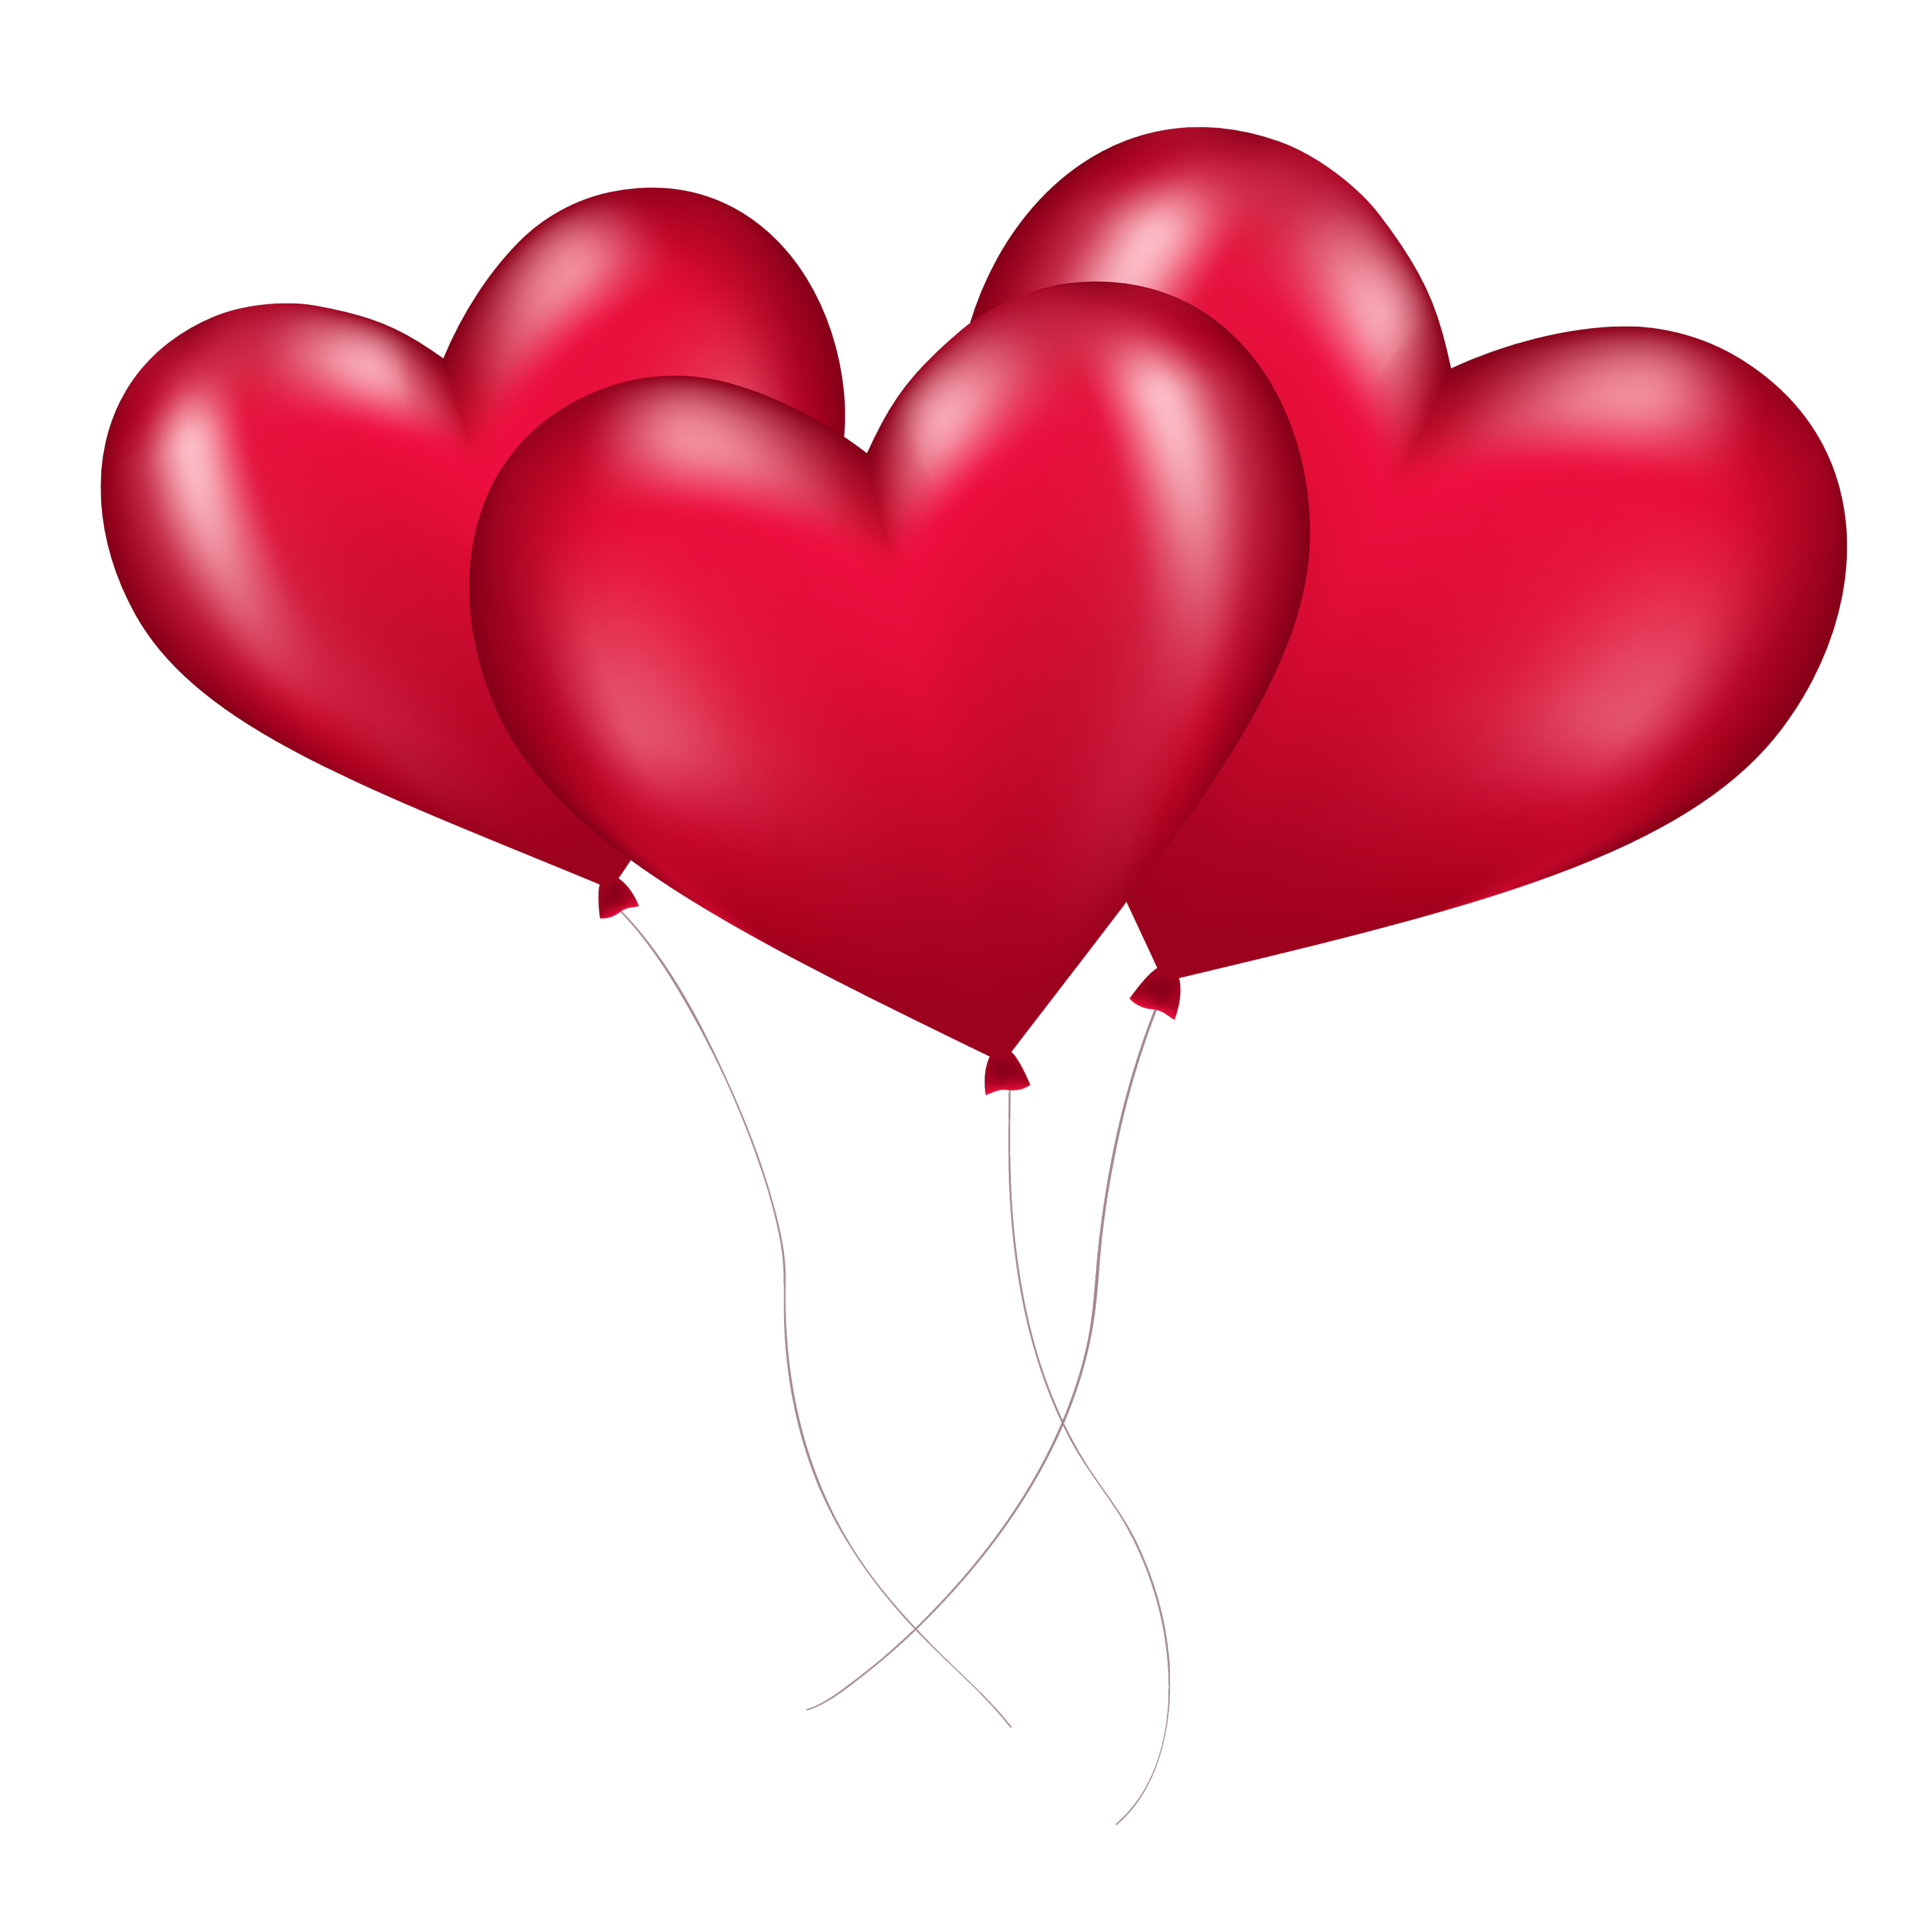 Heart Shaped Balloon PNG Image